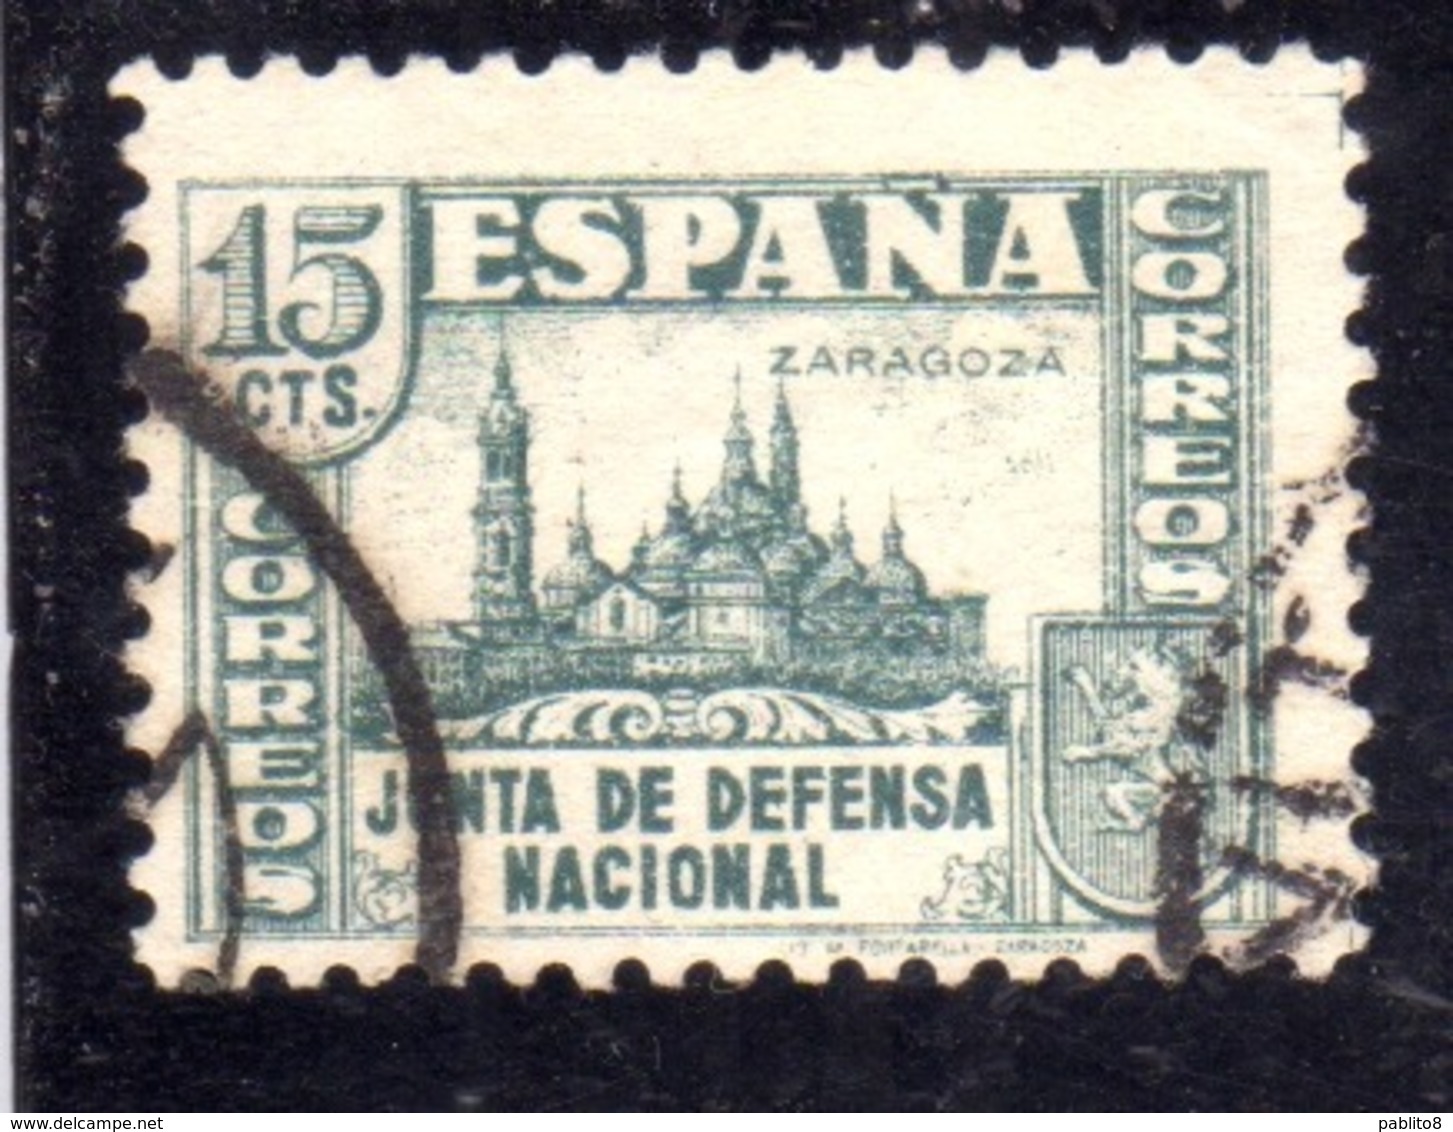 SPAIN ESPAÑA SPAGNA 1936 CATHEDRAL DEL PILAR ZARAGOZA JUNTA DE DEFENSA NATIONAL CENT. 15c USED USATO OBLITERE' - Oblitérés